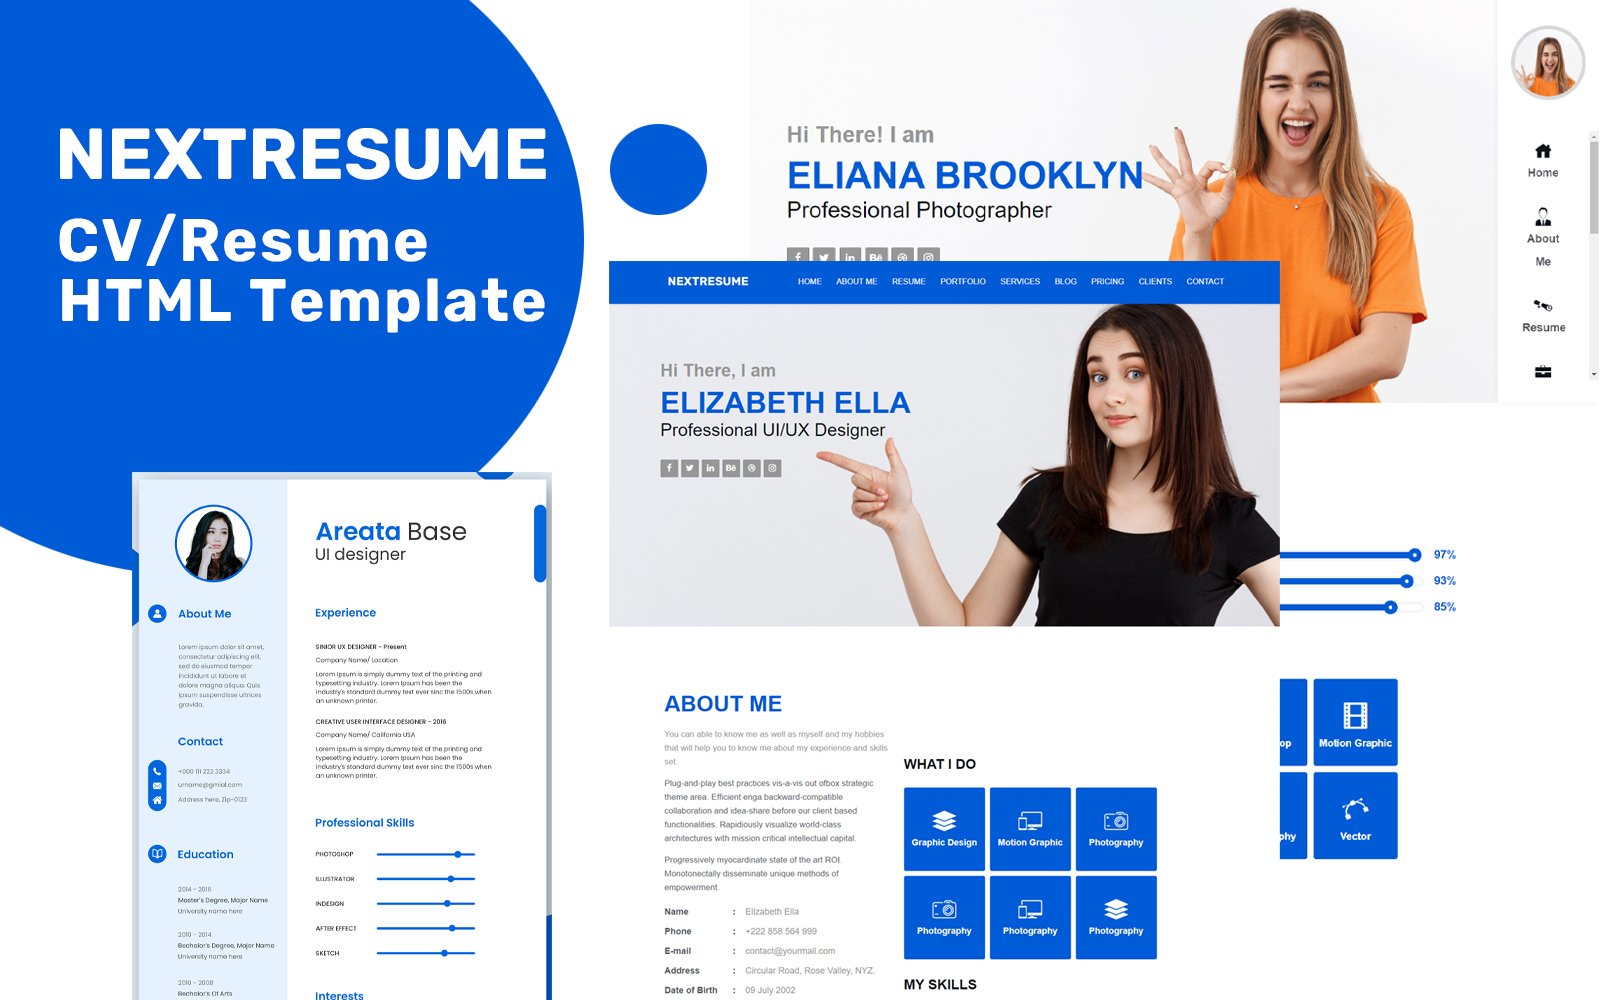 NextResume - CV/Resume HTML Template